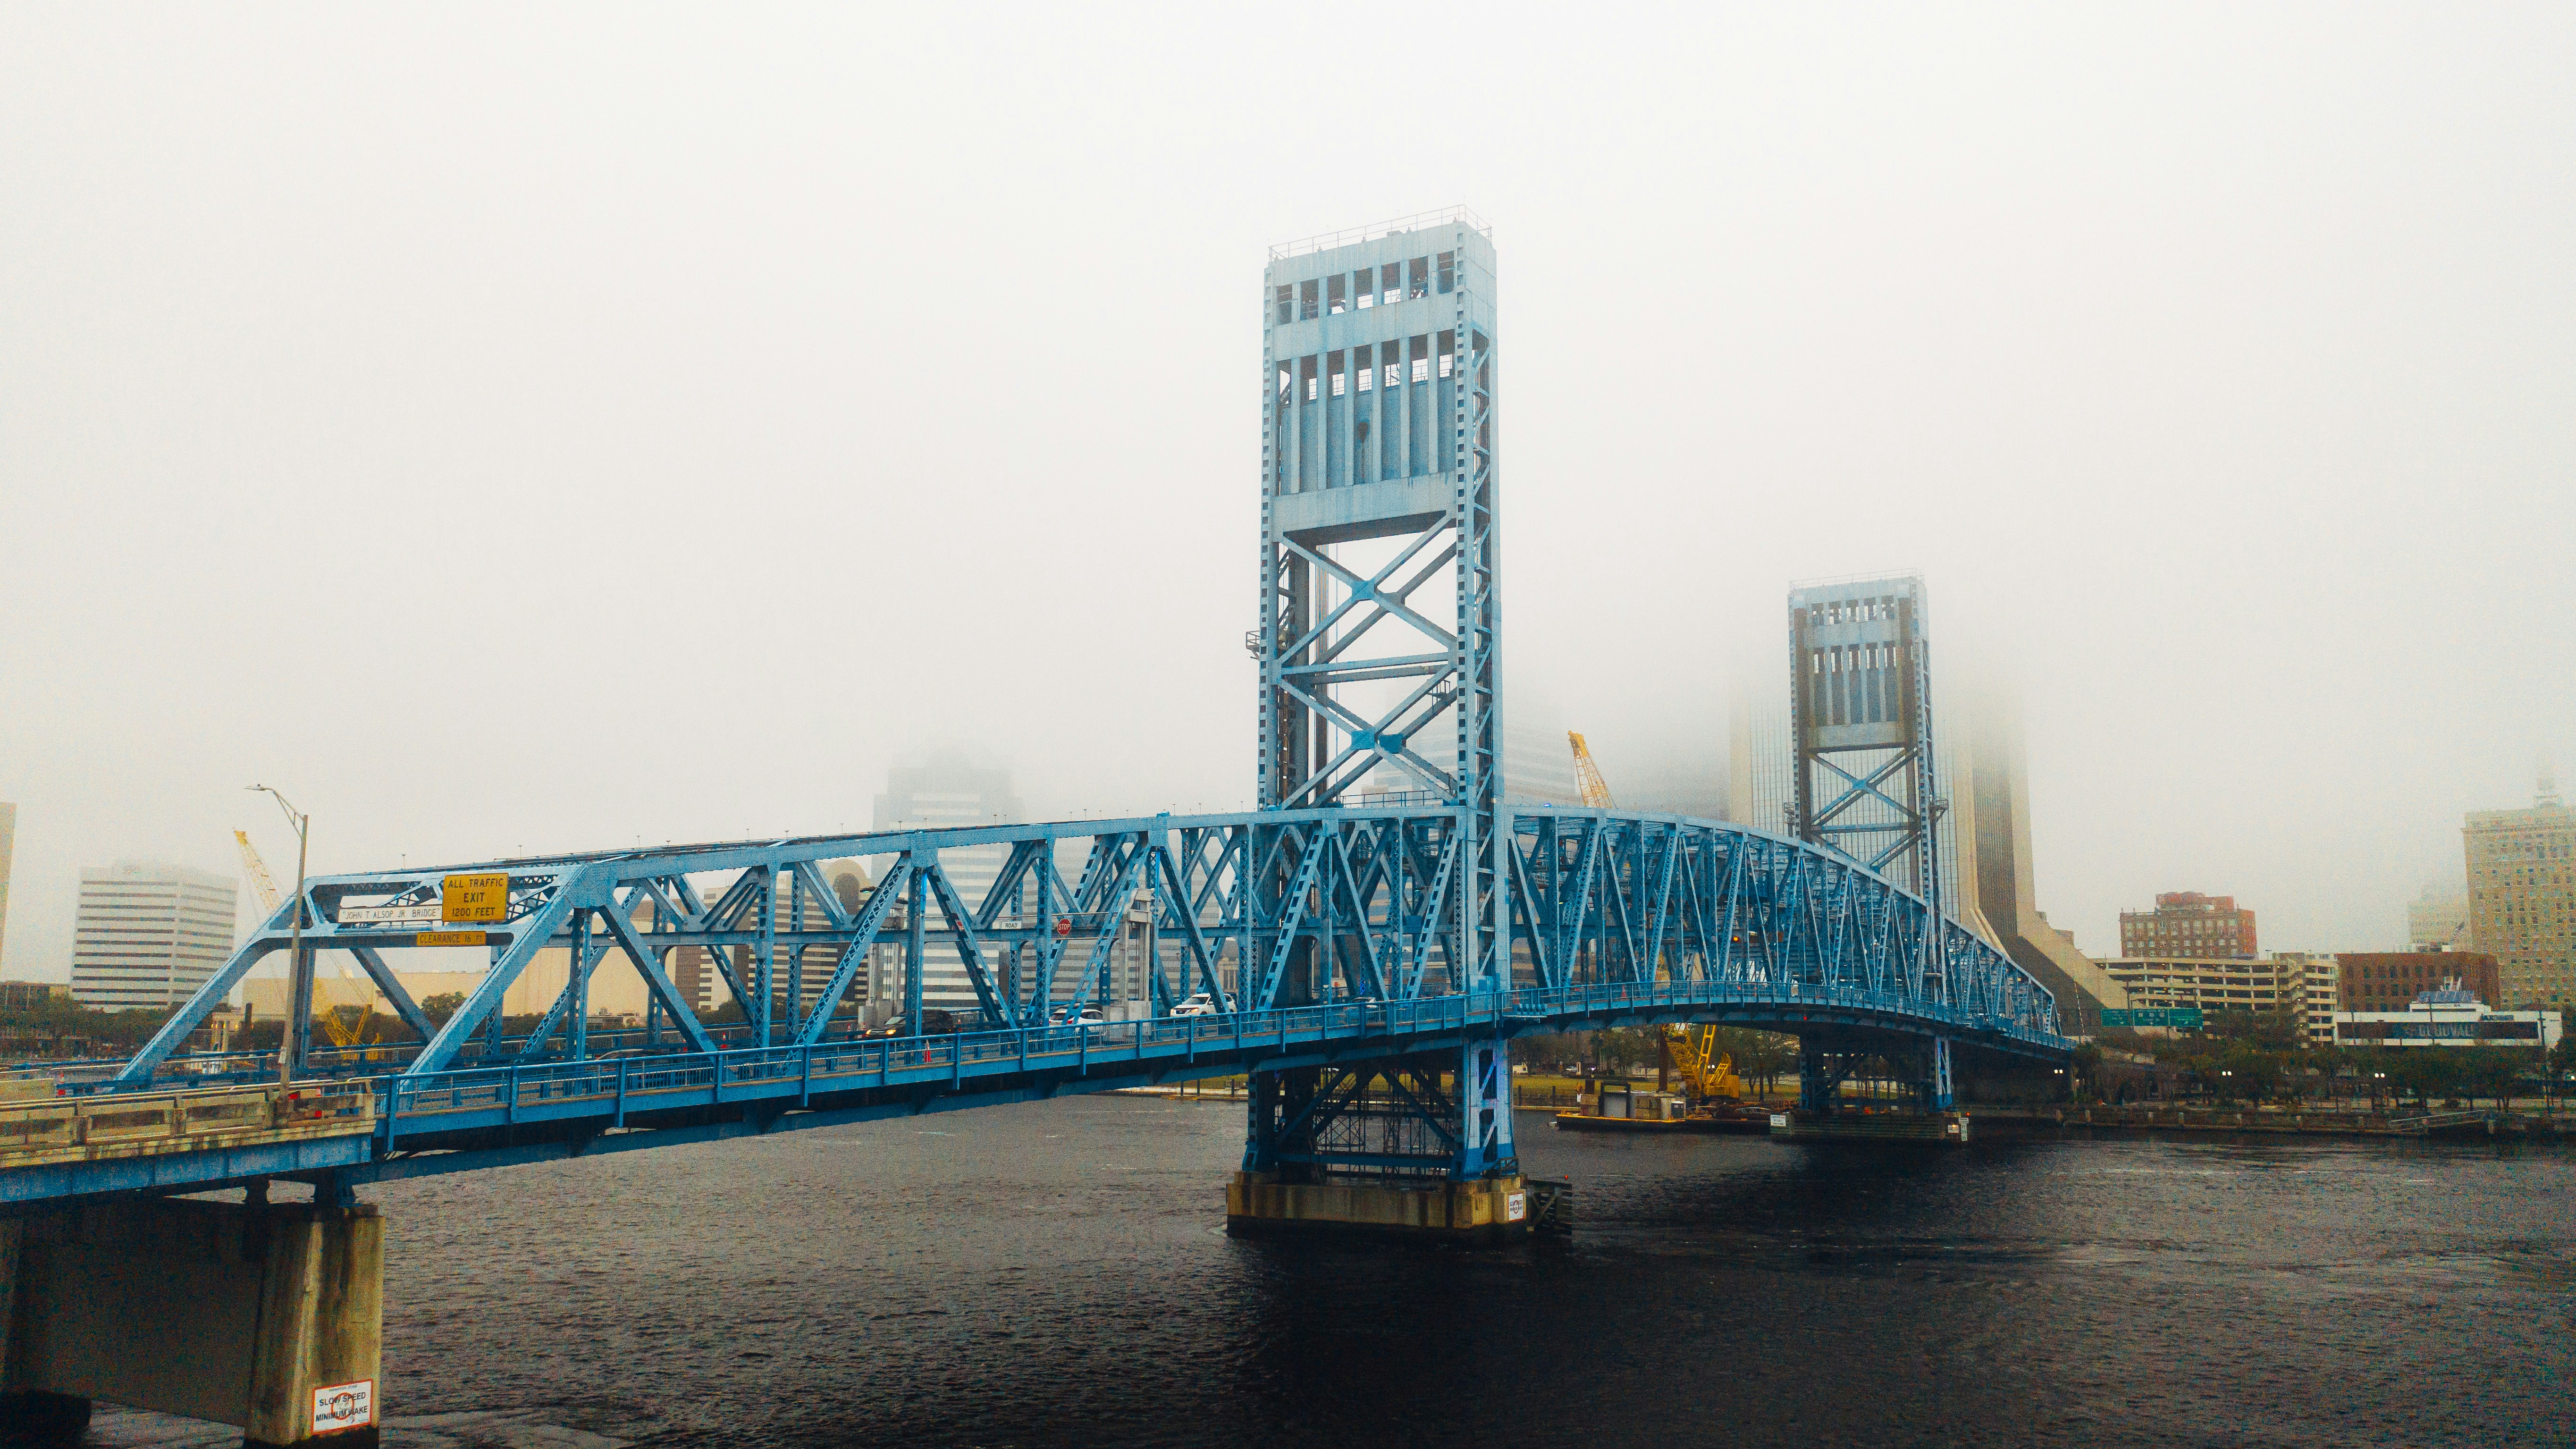 gray steel bridge over body of water during daytime